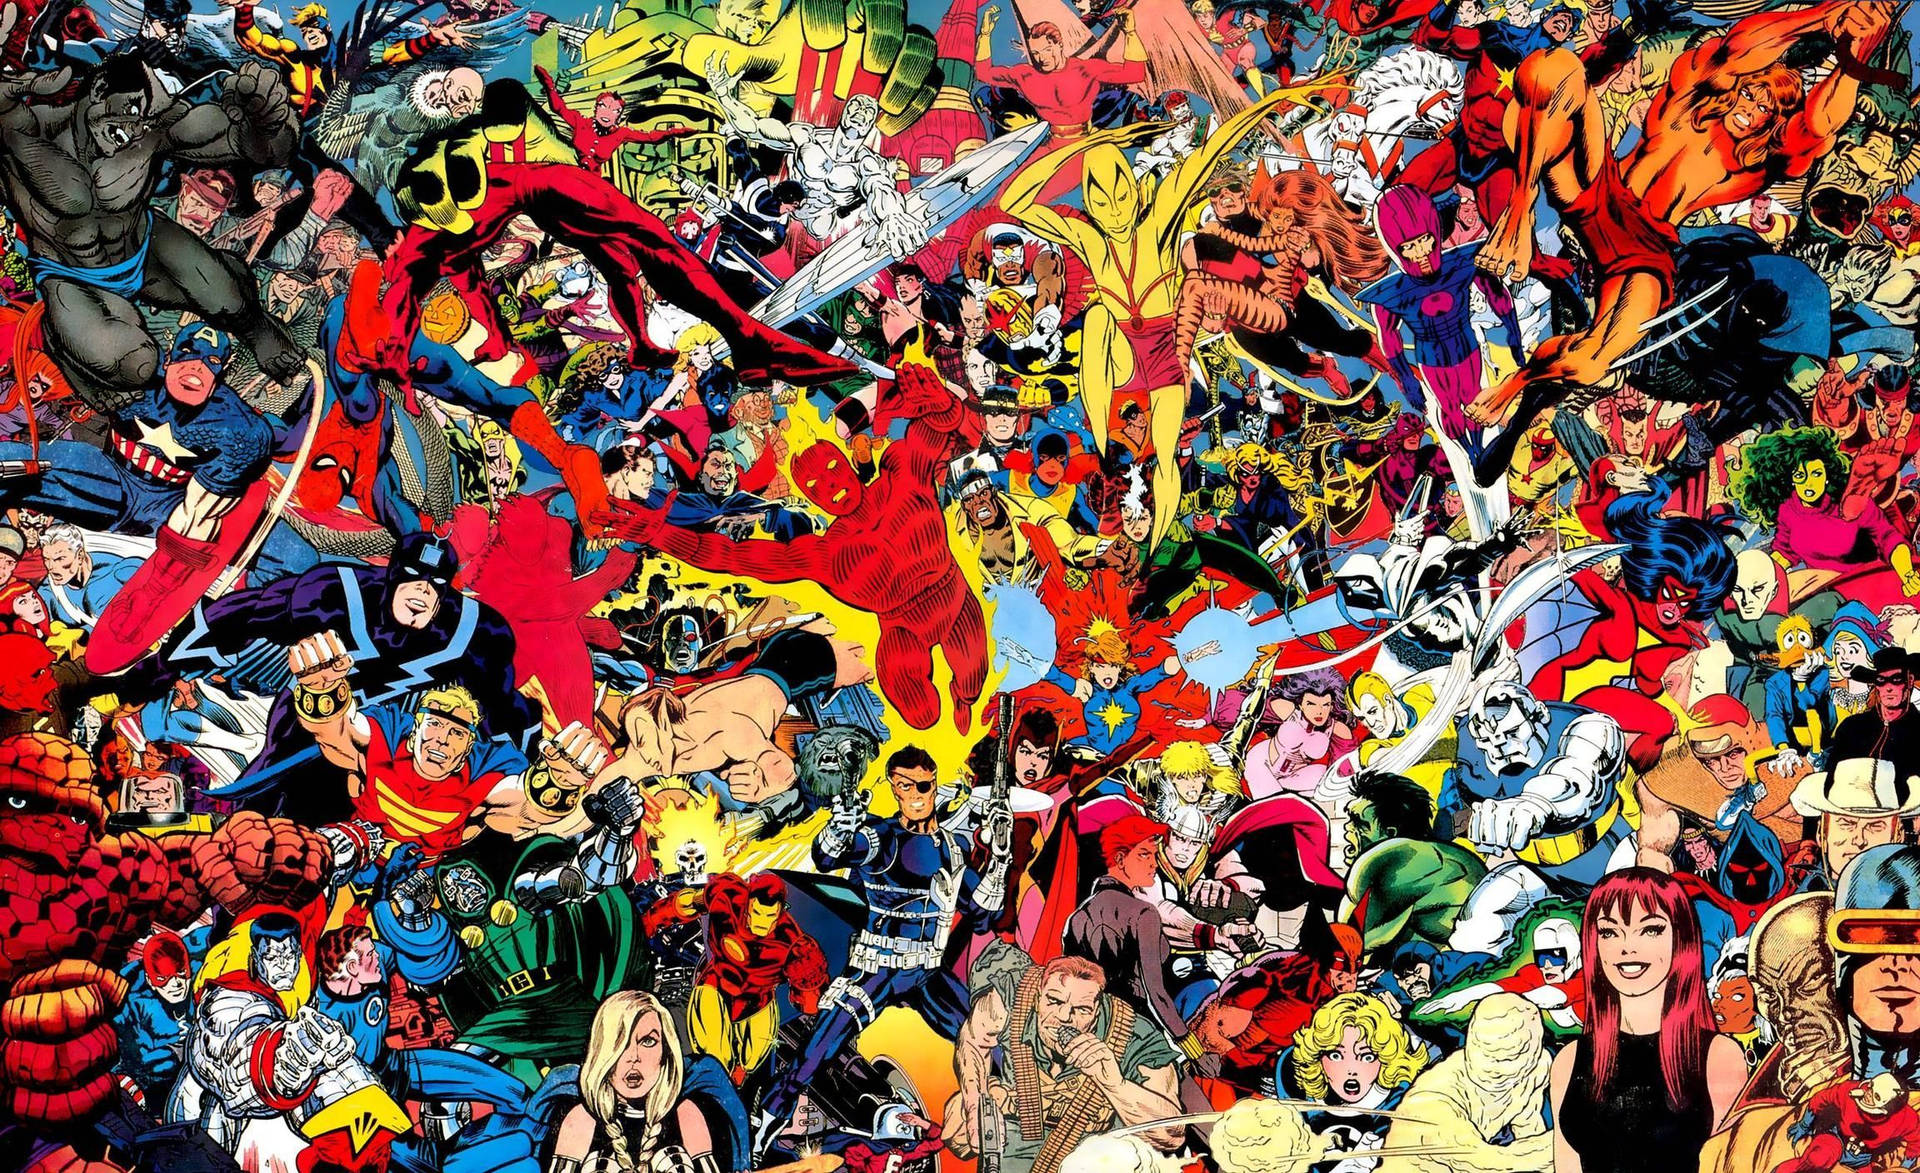 Free Comic Book Wallpaper Downloads, [300+] Comic Book Wallpapers for FREE  